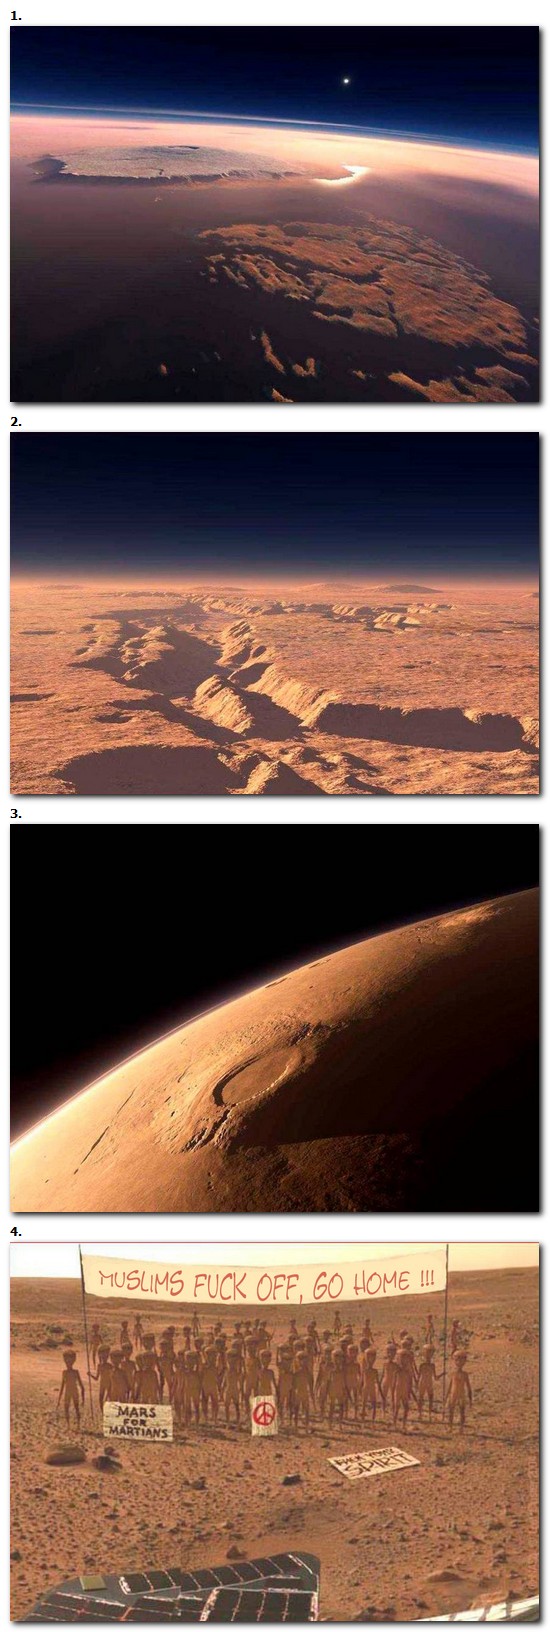 Latest photos from Mars satellite